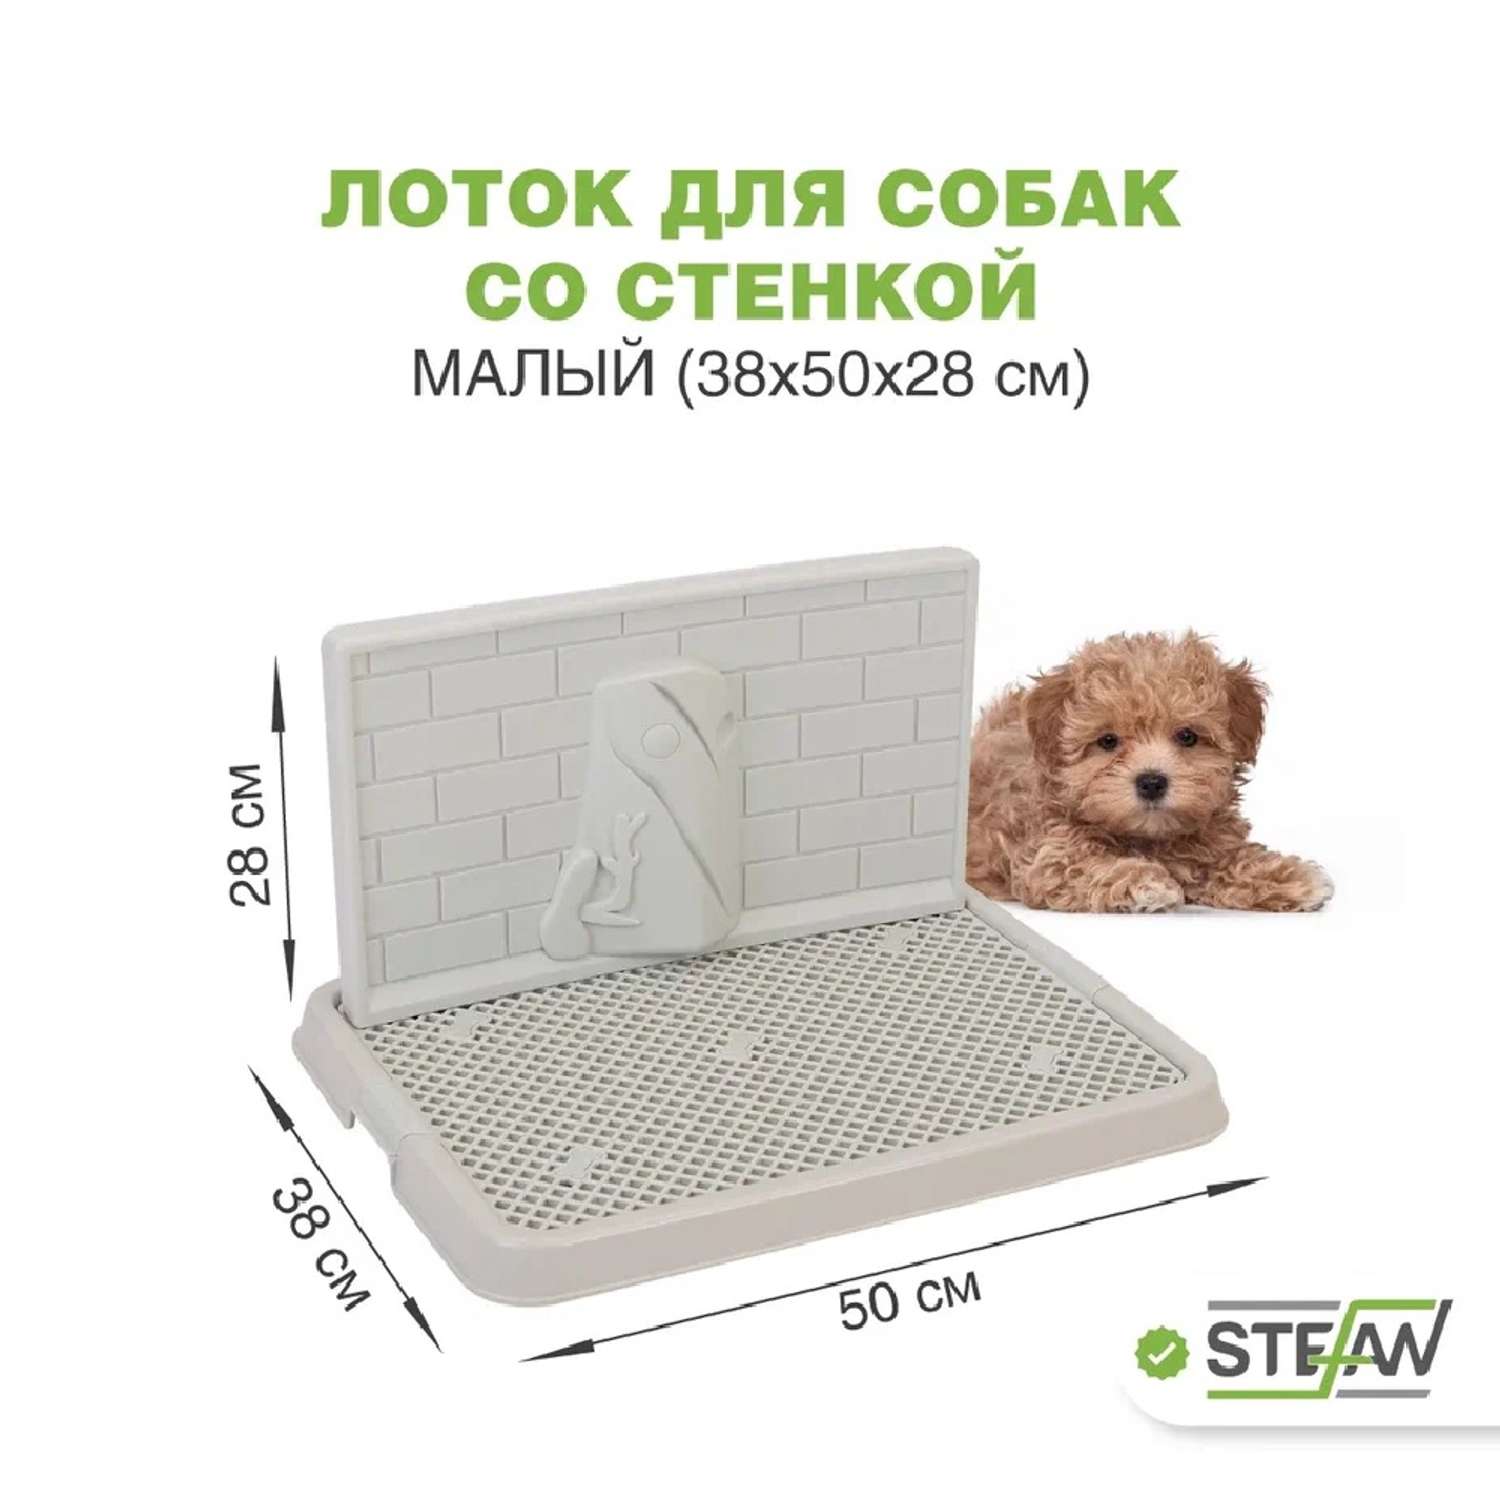 Туалет лоток для собак Stefan со стенкой малый S 50х38х28 см серый - фото 1